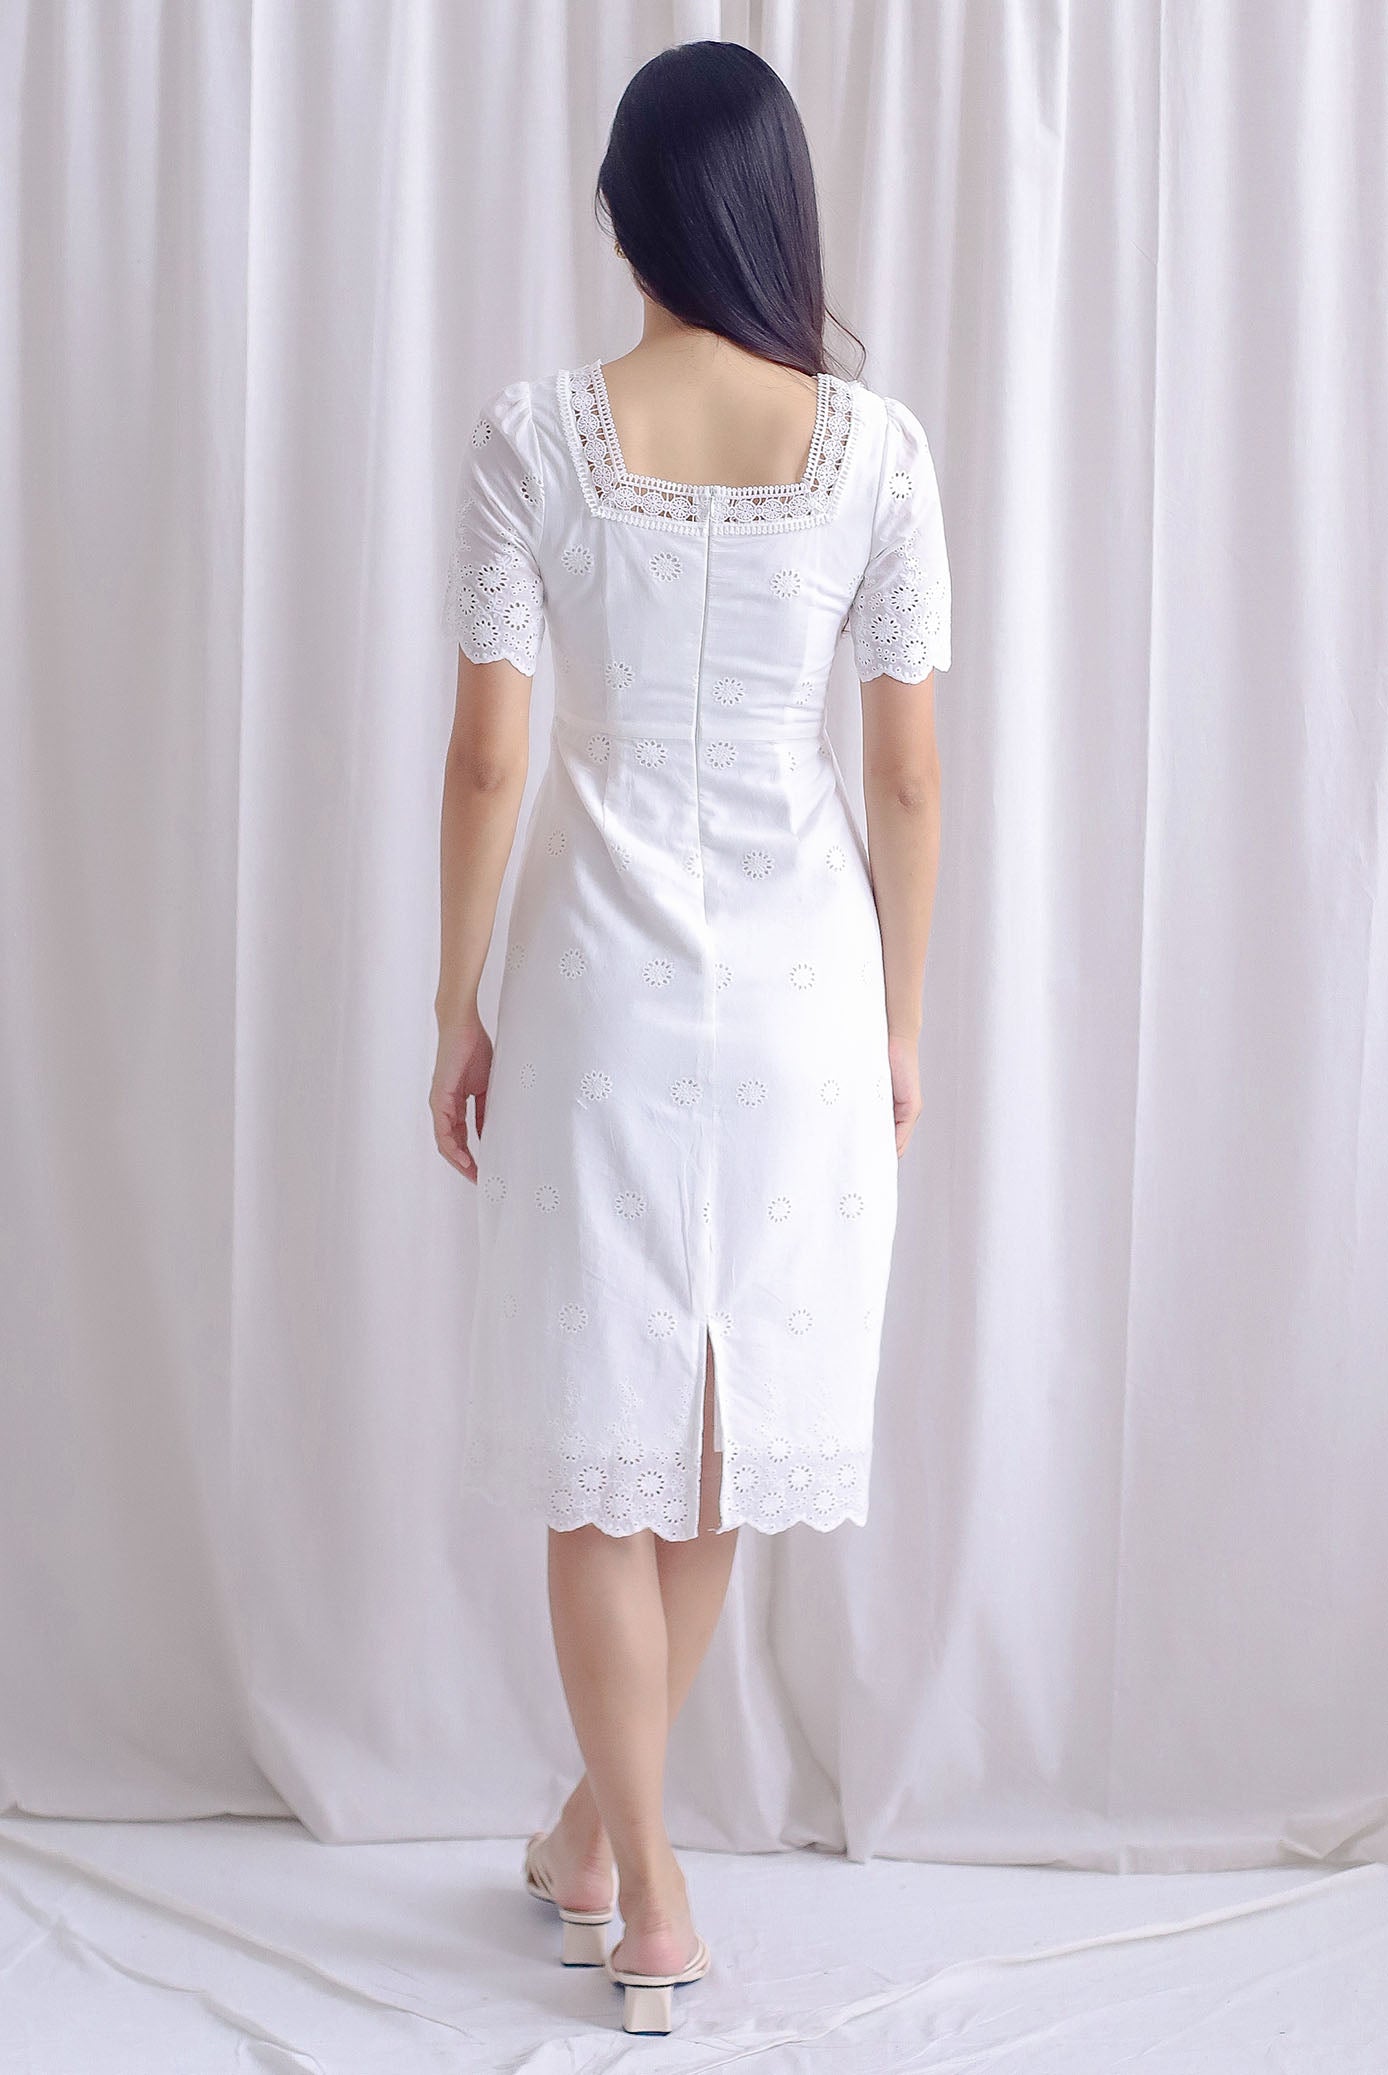 Mabelle Eyelet Square Neck Sleeve Dress In White